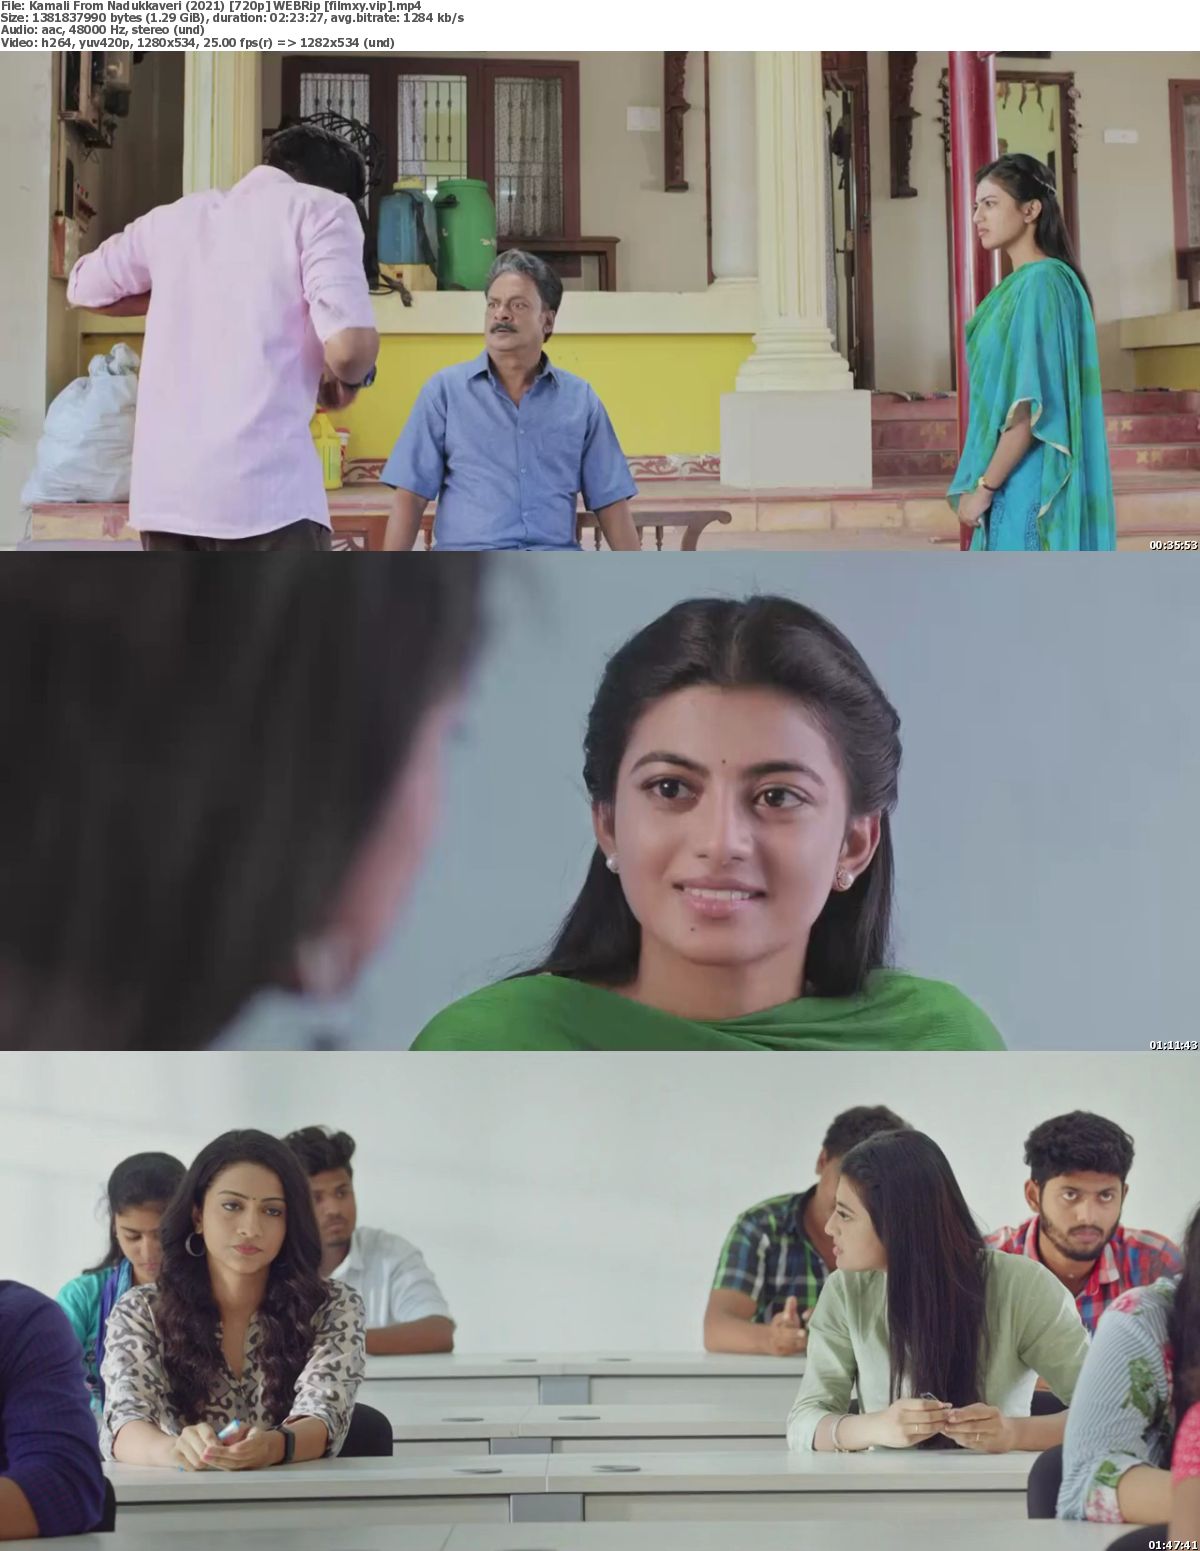 Watch Kamali from Nadukkaveri (2021) Full Movie on Filmxy